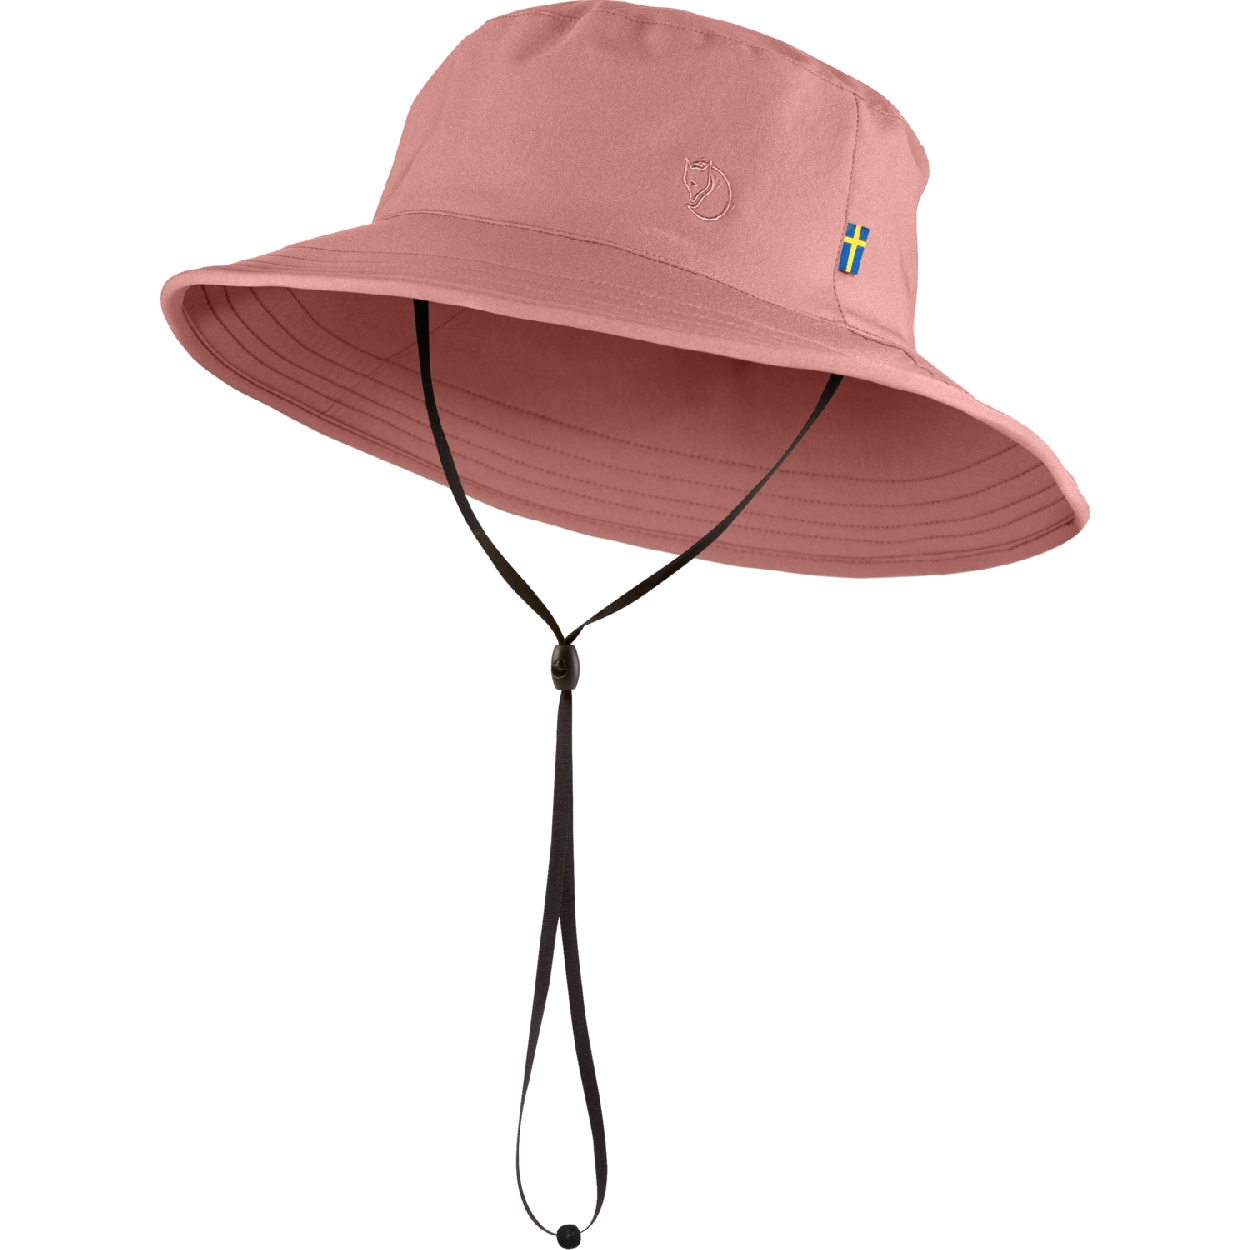 Abisko Sun Hat, Dusty Rose